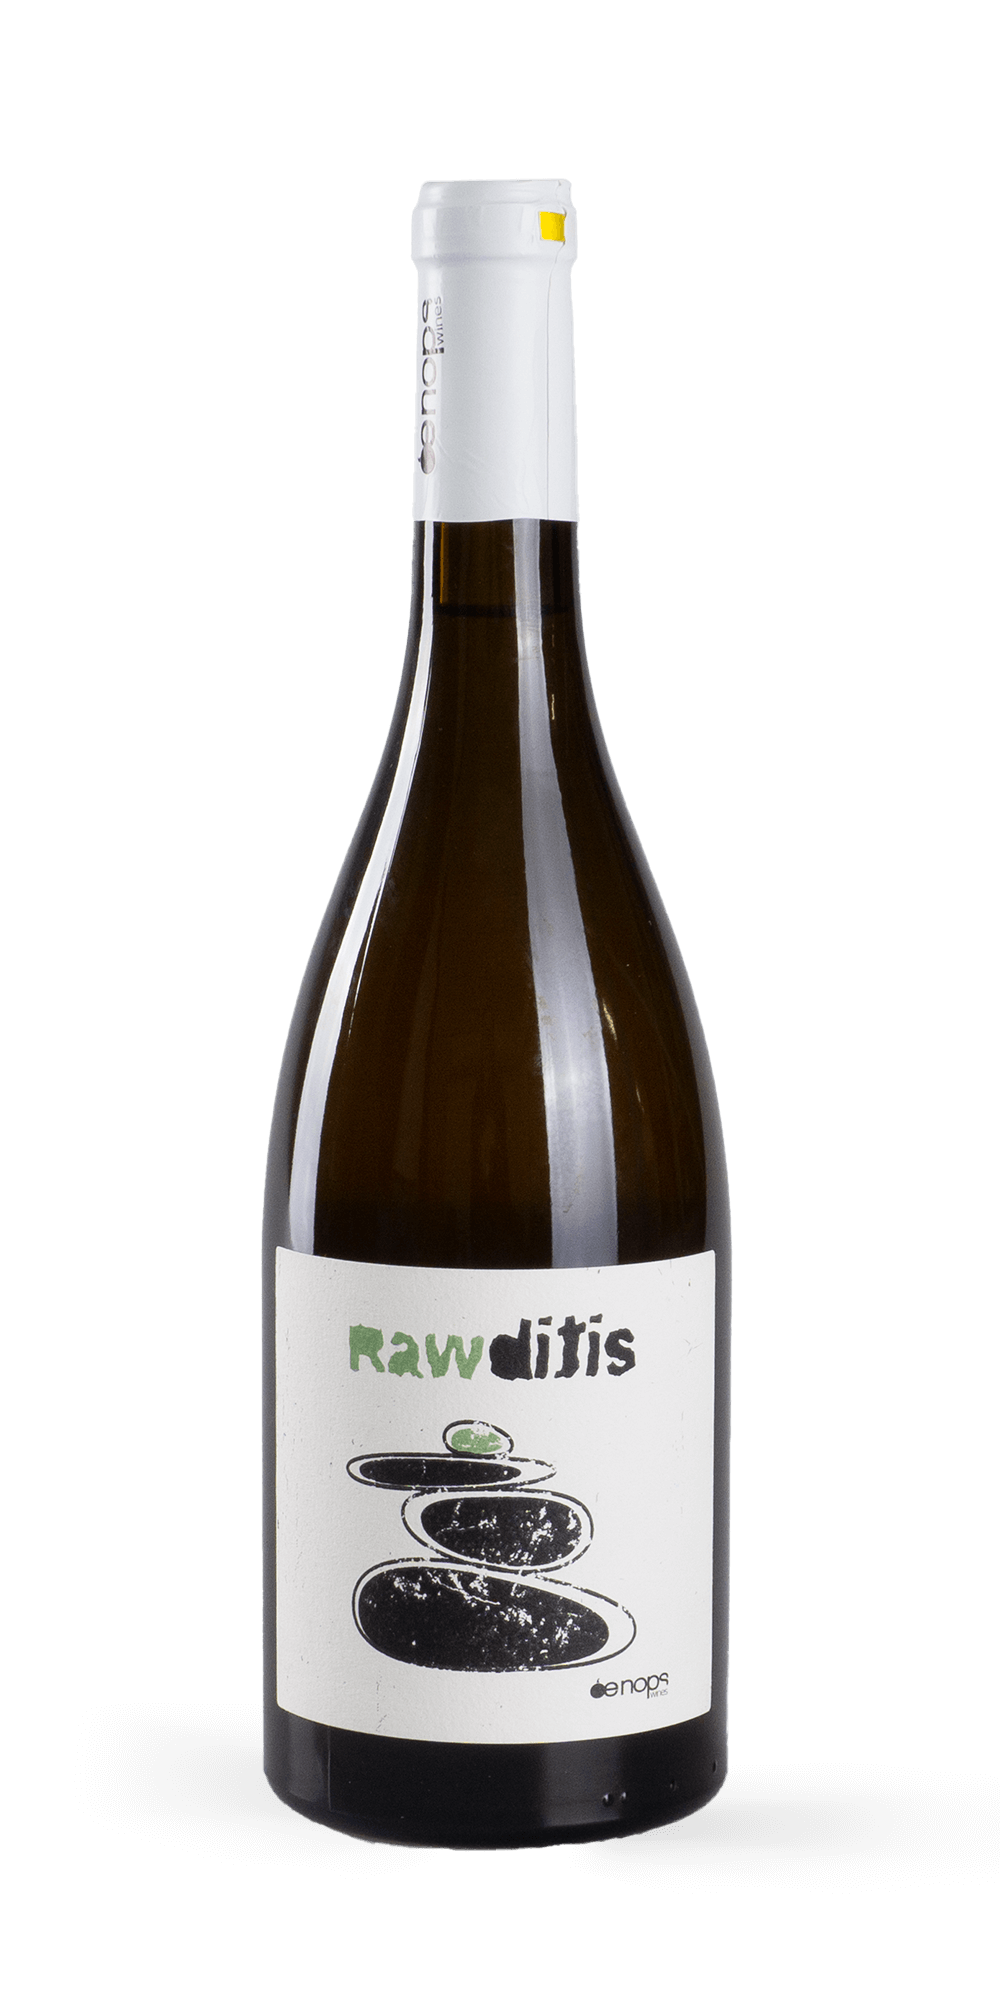 Rawditis 2021 - Oenops Wines